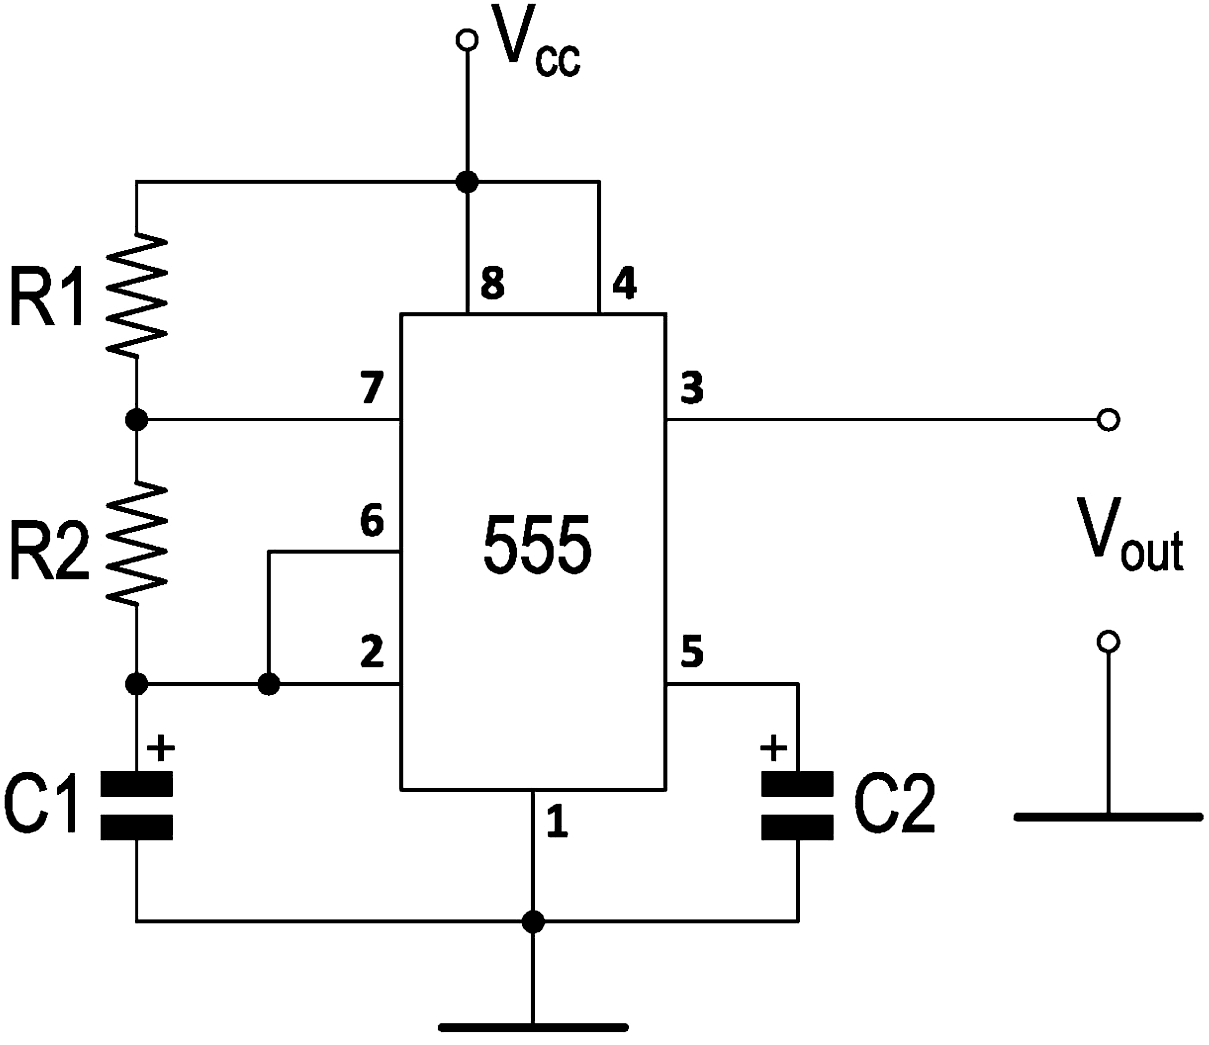 Generator circuit based on IC 555